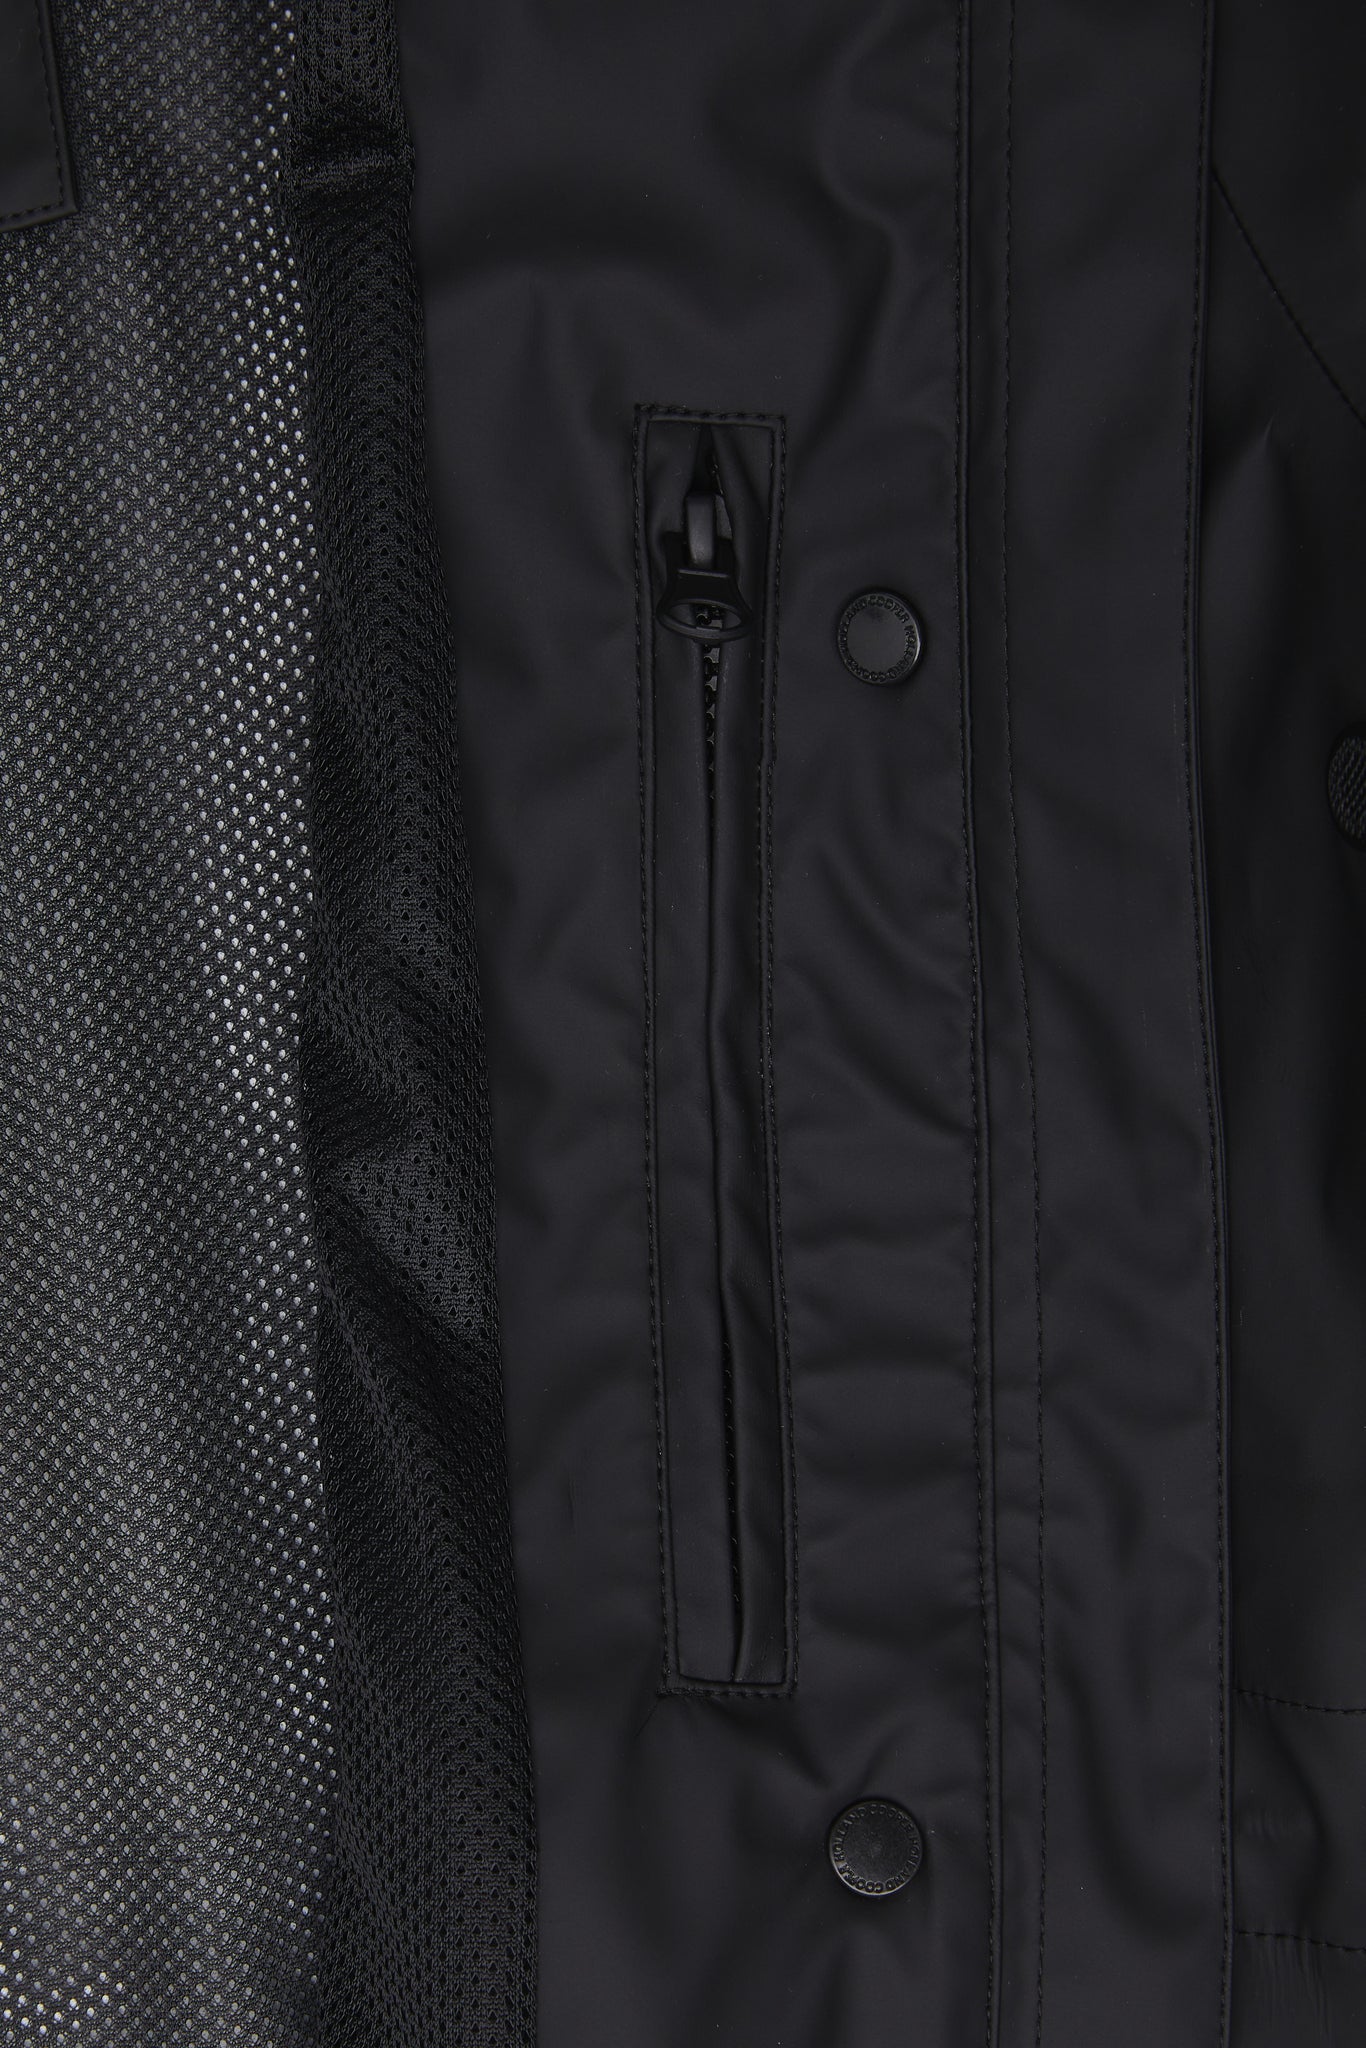 pocket detail of womens black hooded rain coat with black hardware 